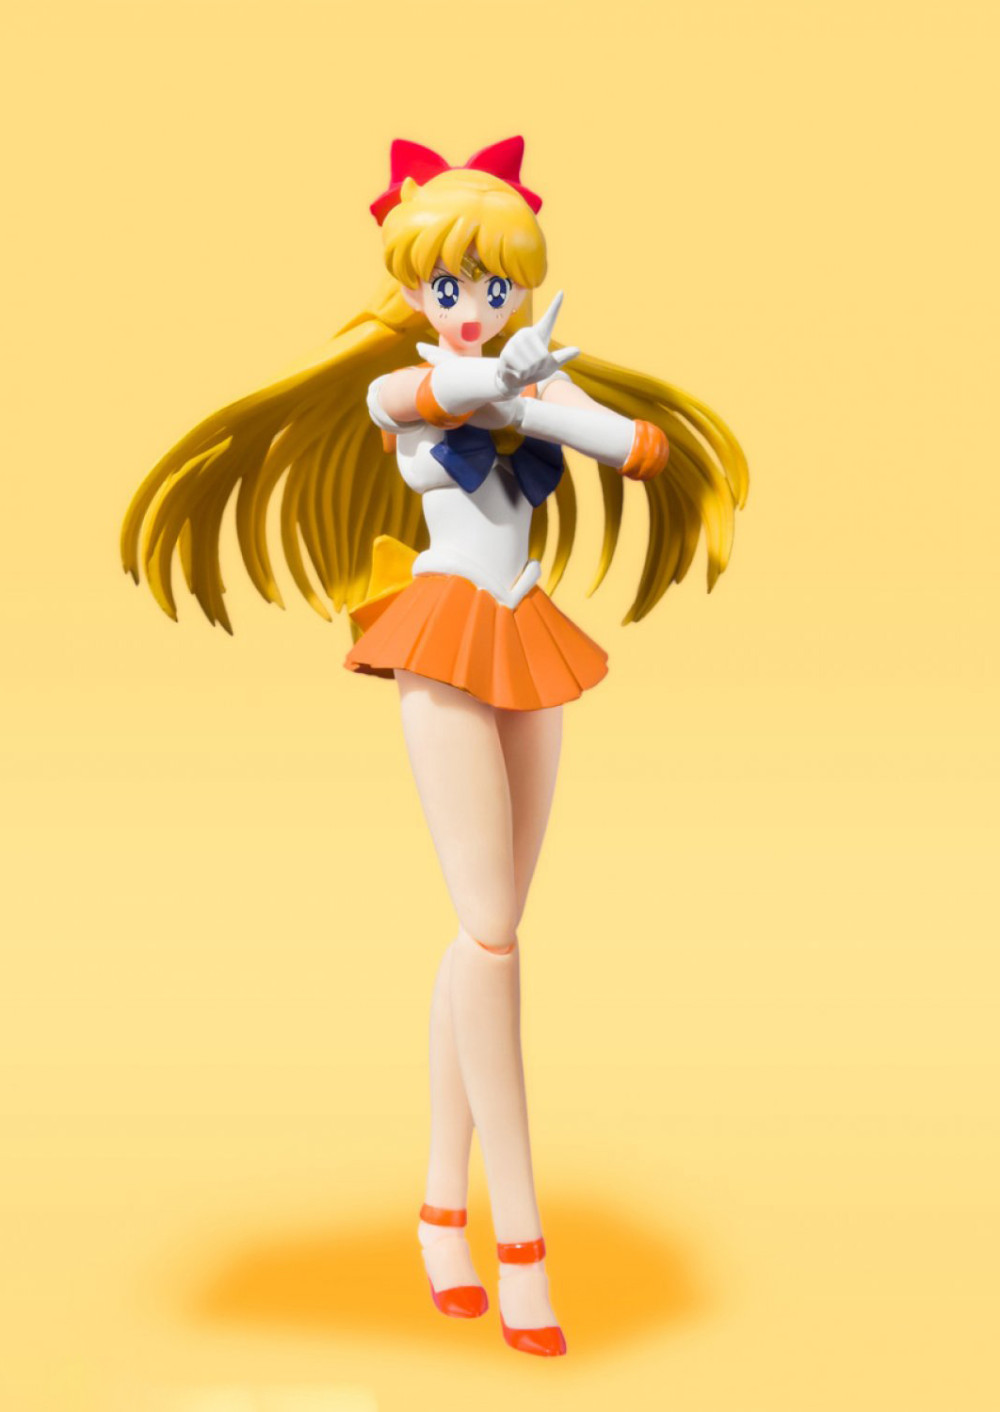  S.H.Figuarts: Sailor Venus Animation Color Edition (14 )